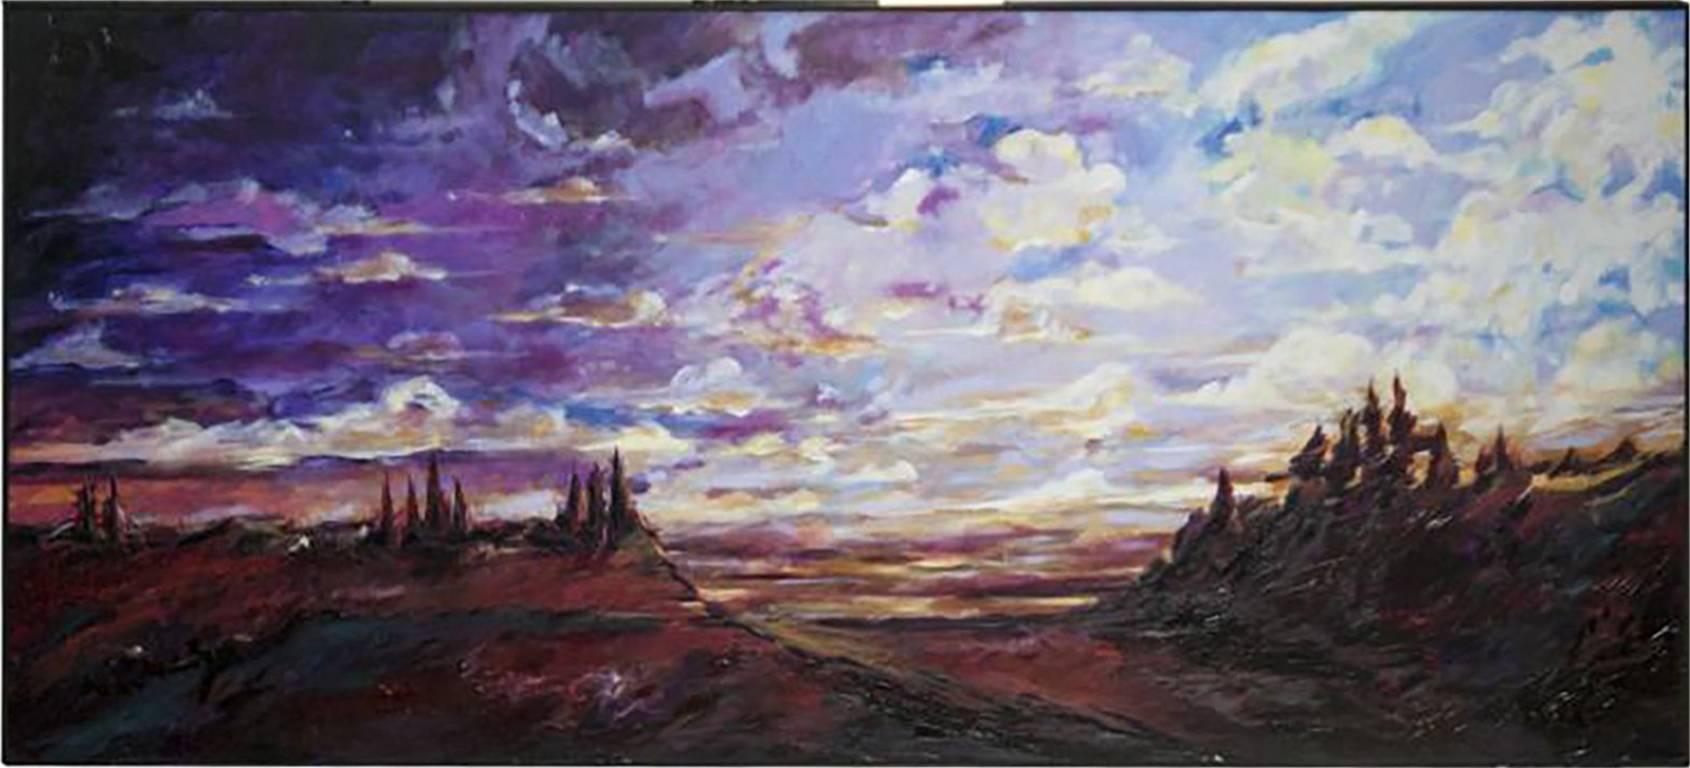 Unknown Landscape Painting - Large Modern Impressionistic Landscape Oil Painting